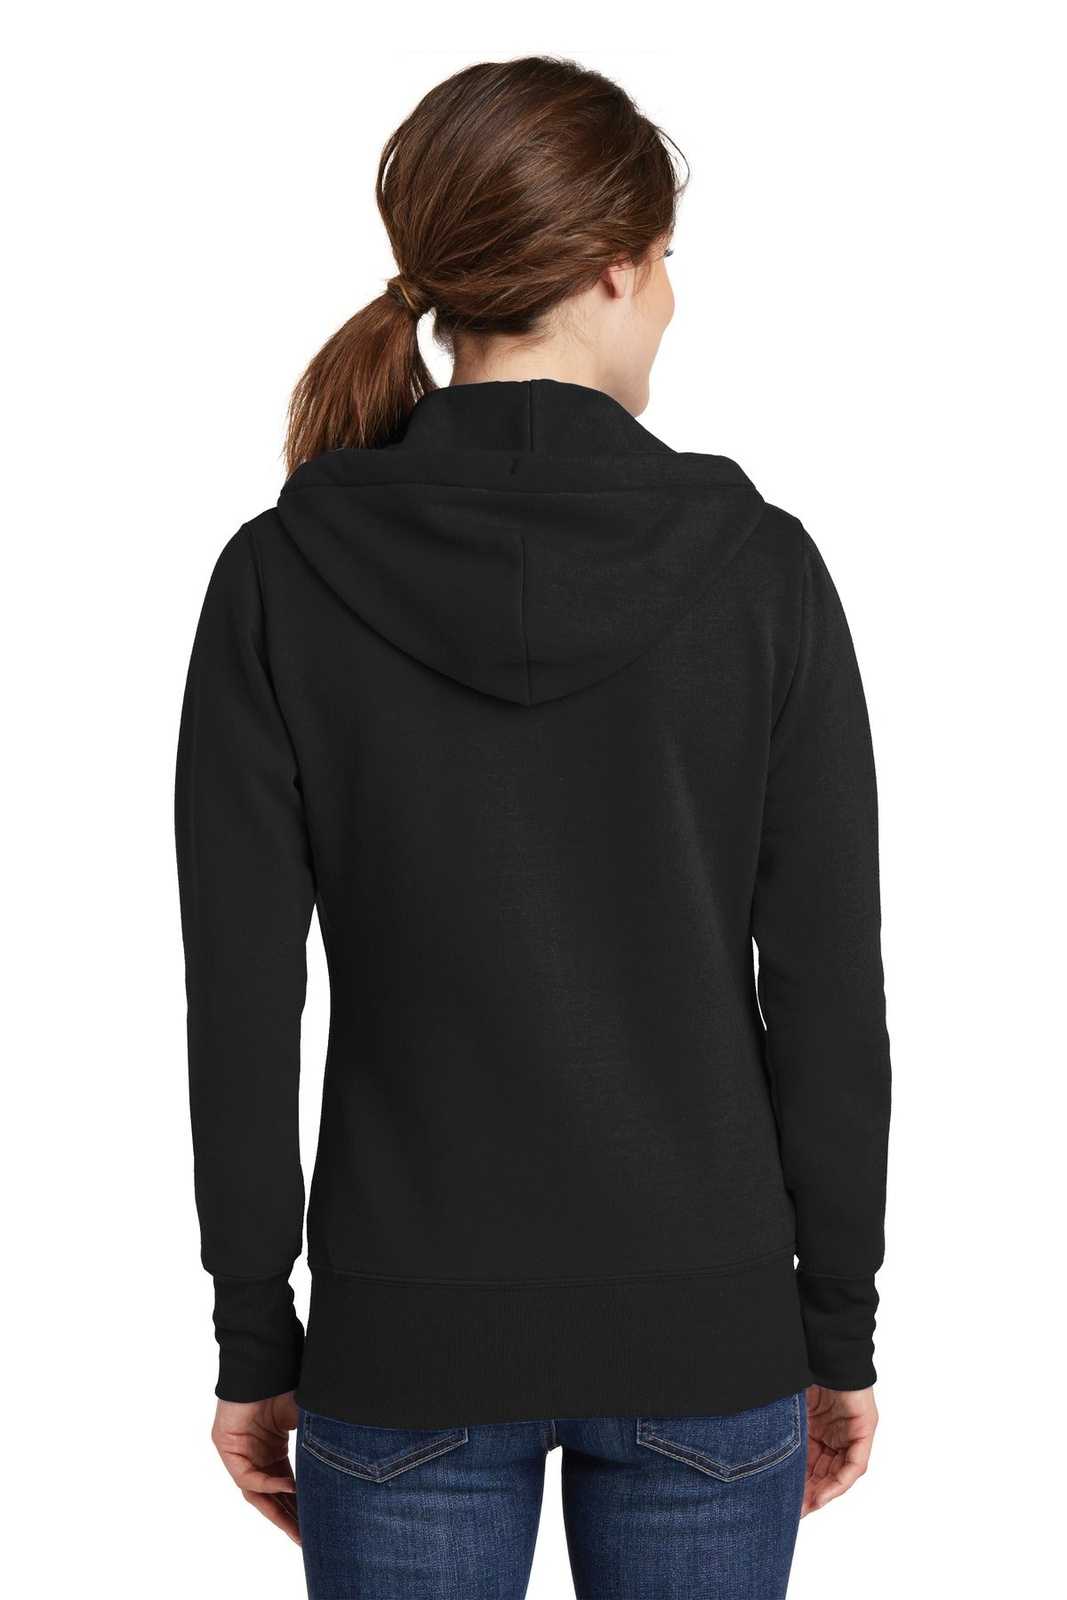 Port & Company LPC78ZH Ladies Core Fleece Full-Zip Hooded Sweatshirt - Jet Black - HIT a Double - 1